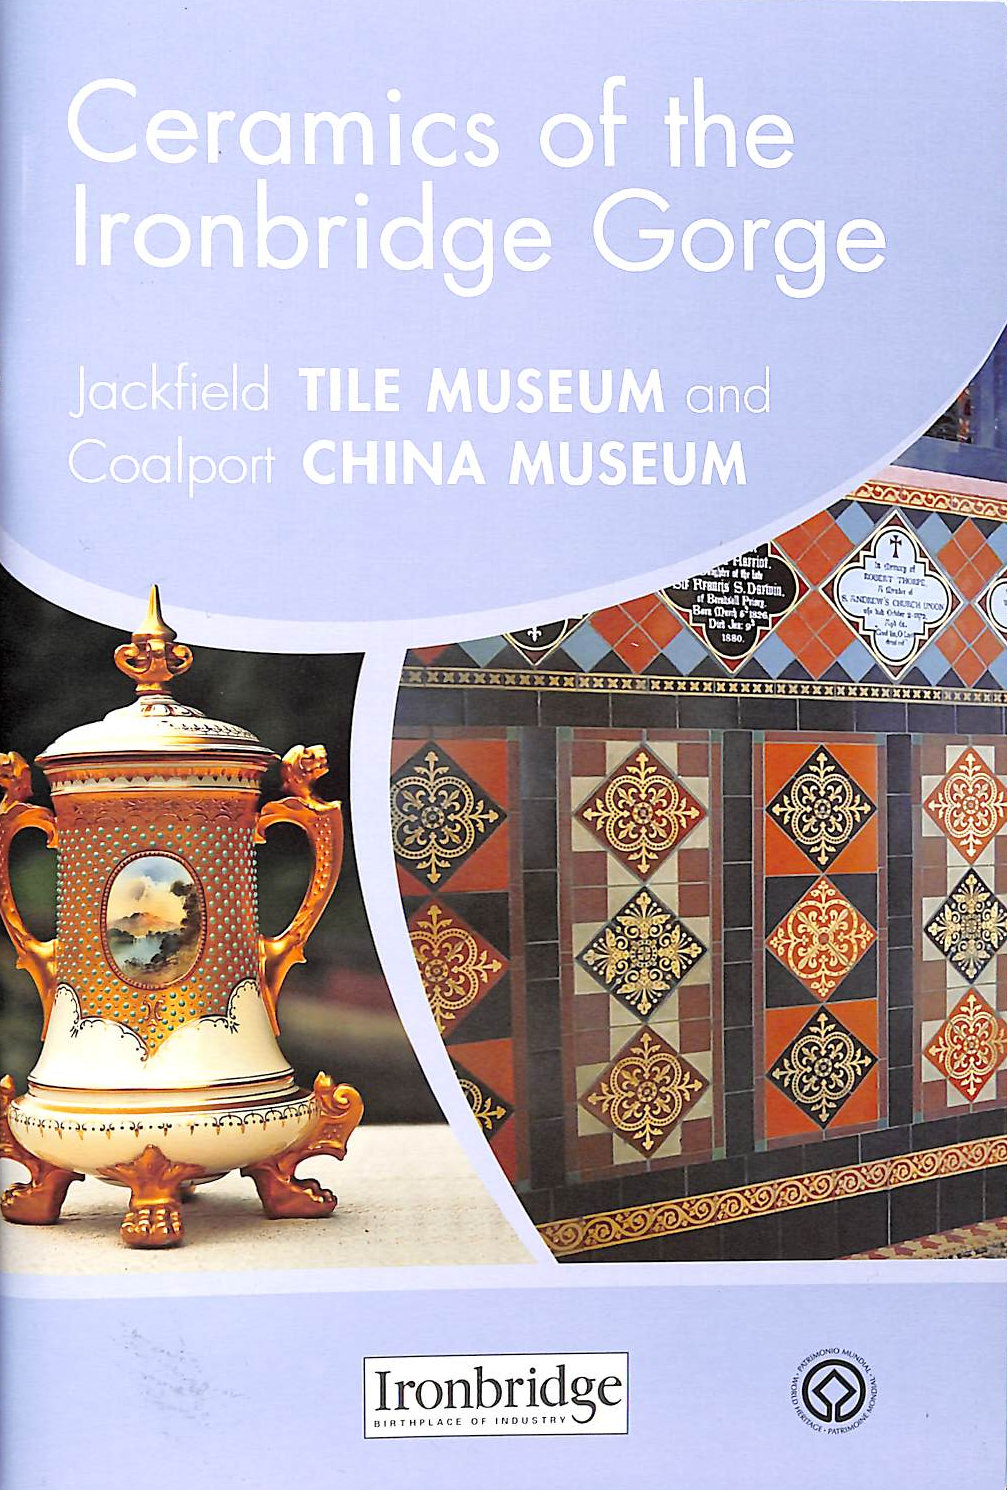 UNKNOWN - Ceramics of the Ironbridge Gorge Jackfield Tile Museum and Coalport China Museum